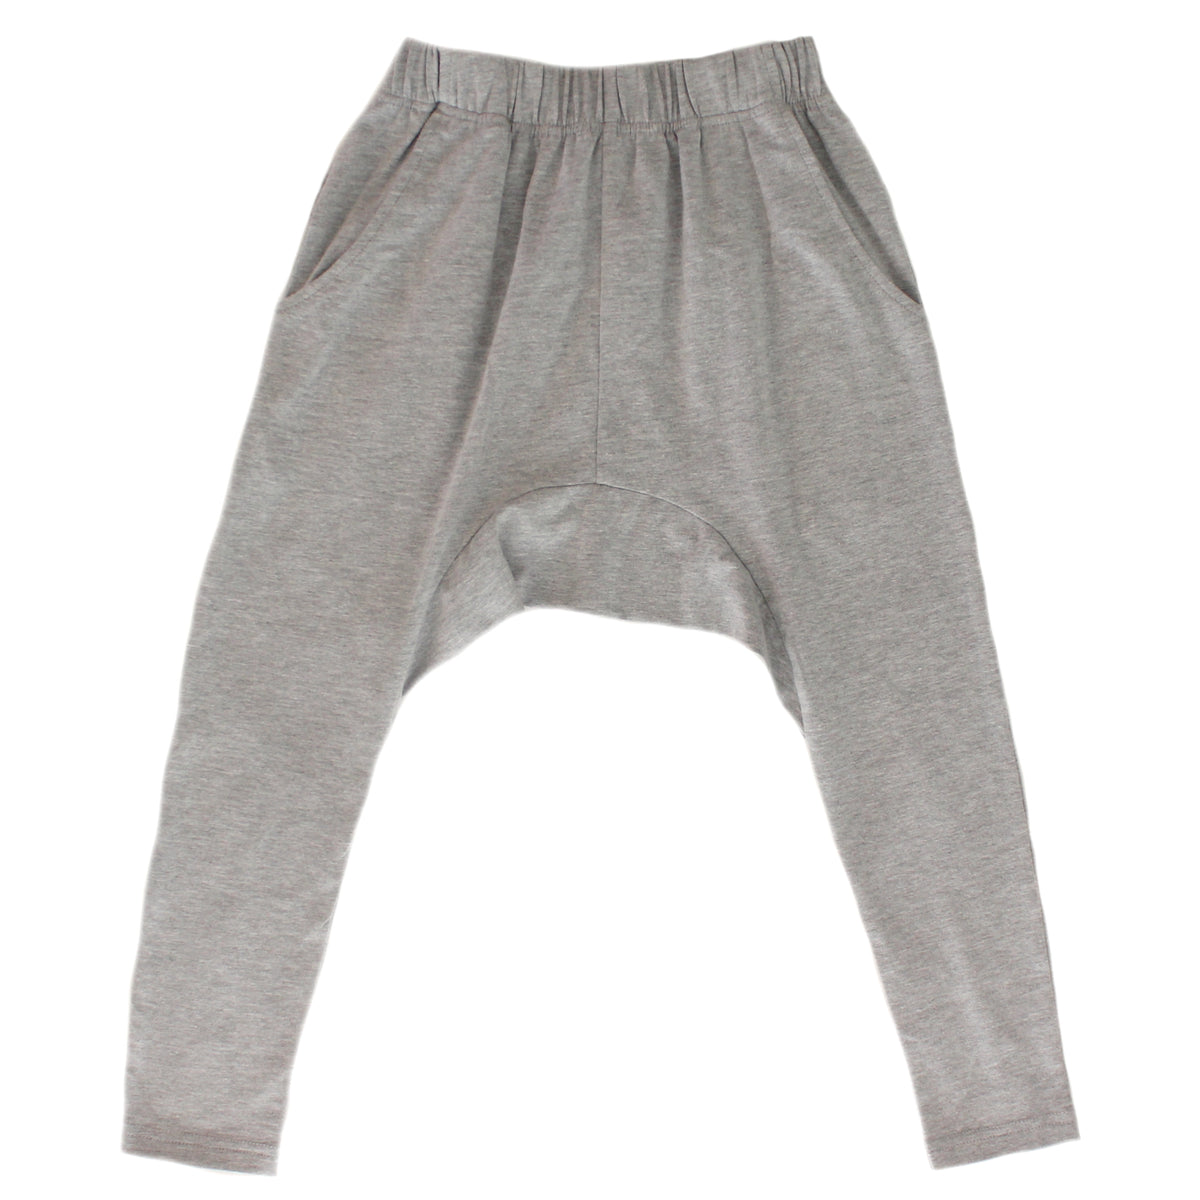 Basic grey pants